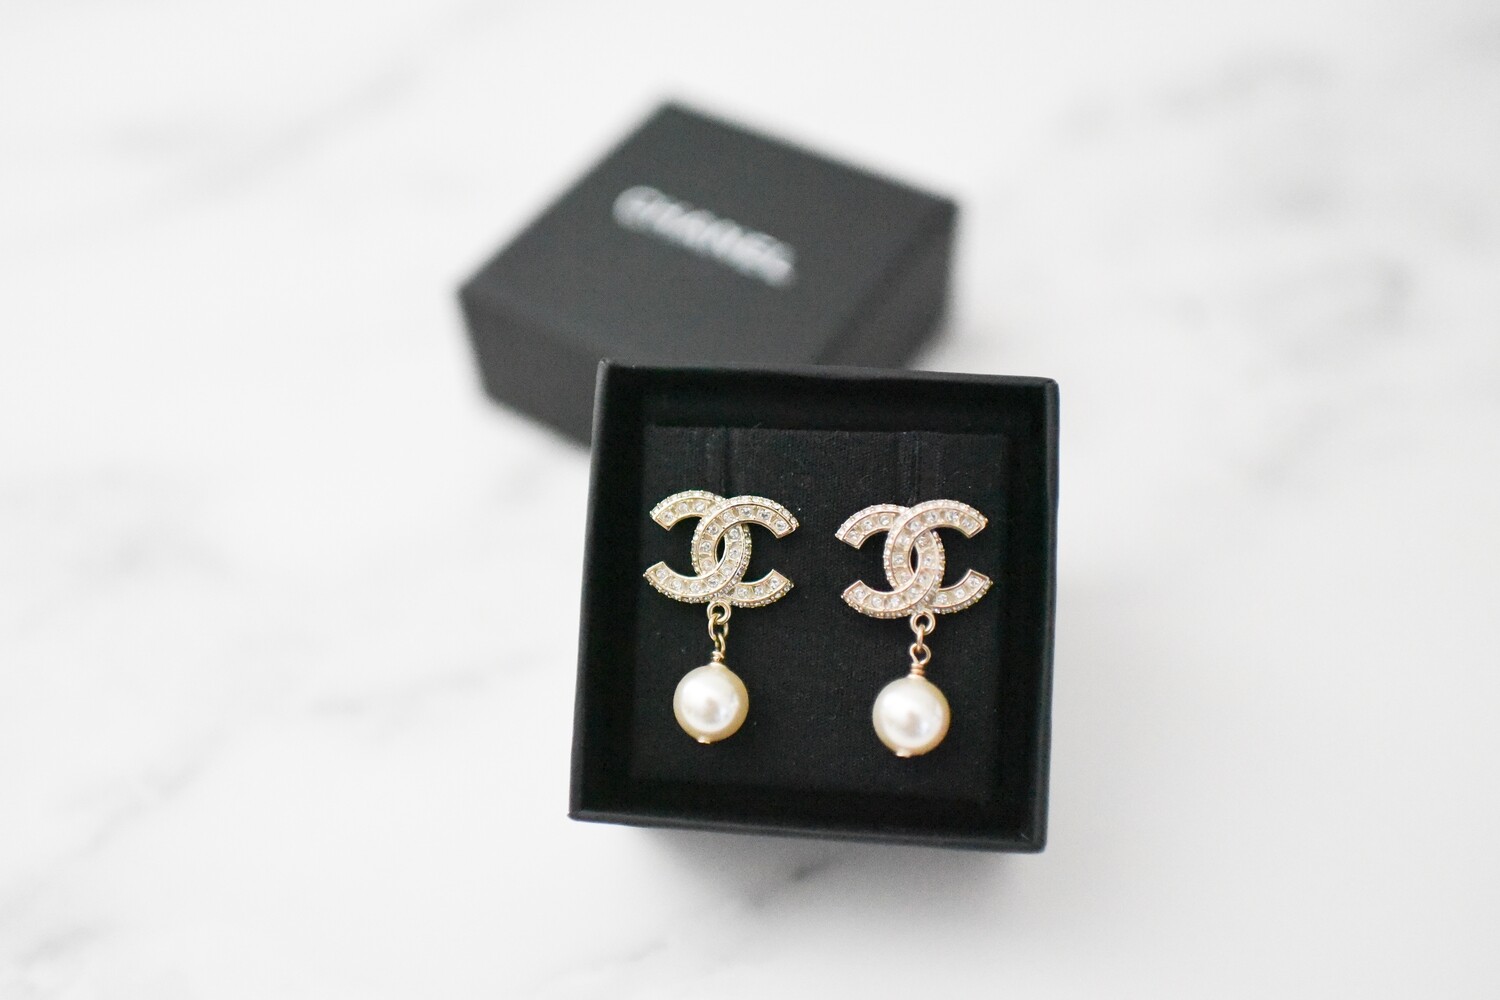 Chanel Earrings Pearl Drop CC Studs in Gold, New in Box GA001